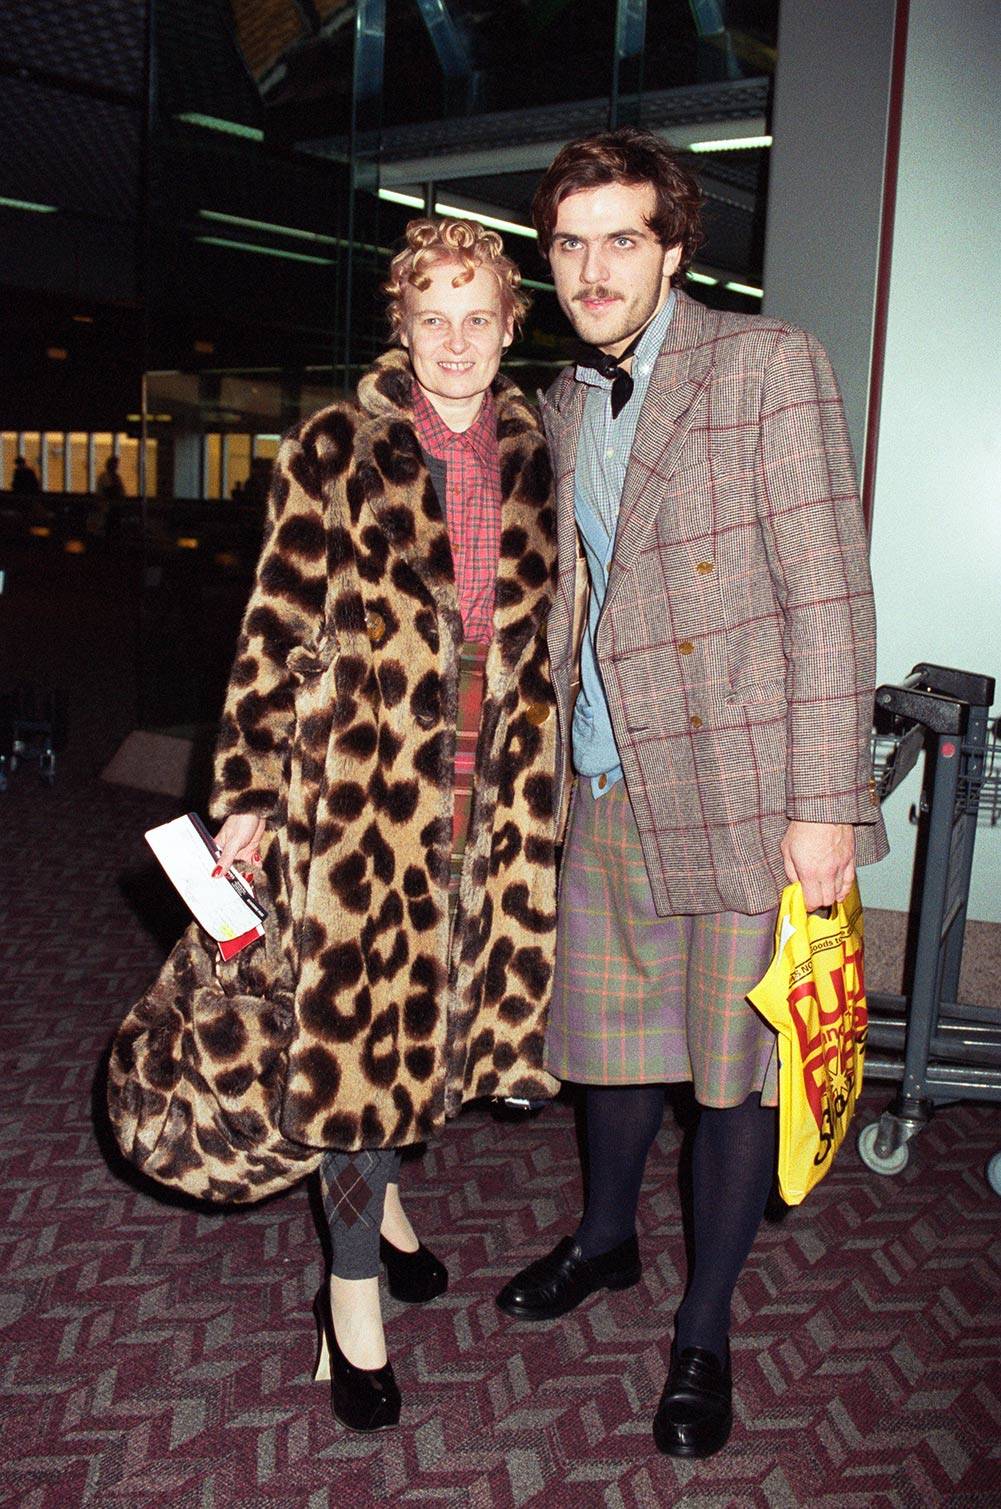 Vivienne Westwood i jej asystent Andreas Kronthaler (późniejszy mąż), 1991. (Fot. Mirrorpix / Contributor)